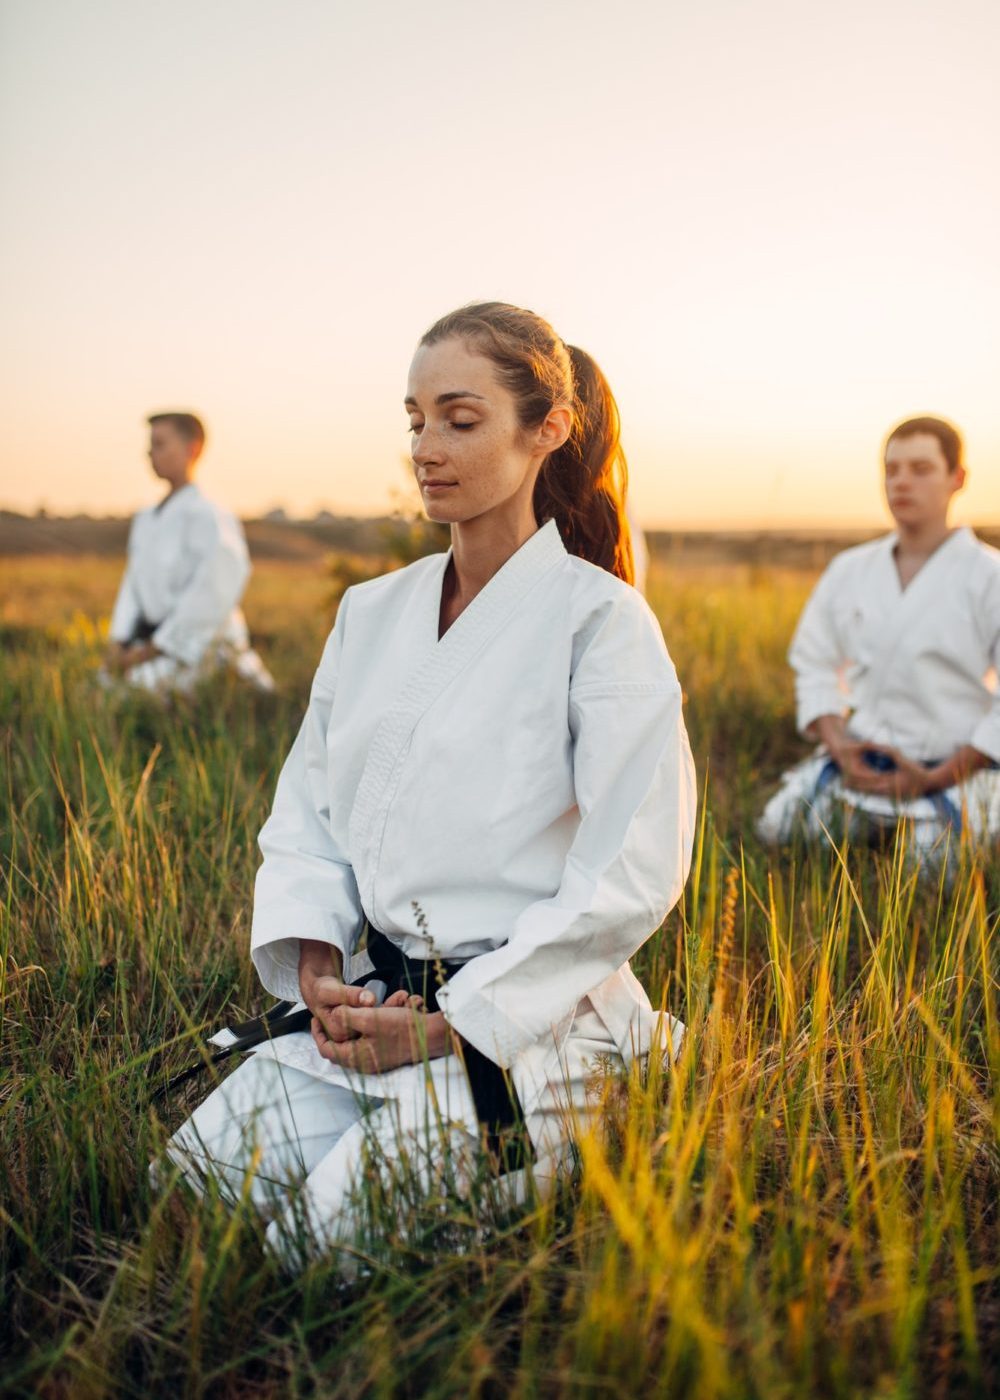 Karate class meditates on training in summer field